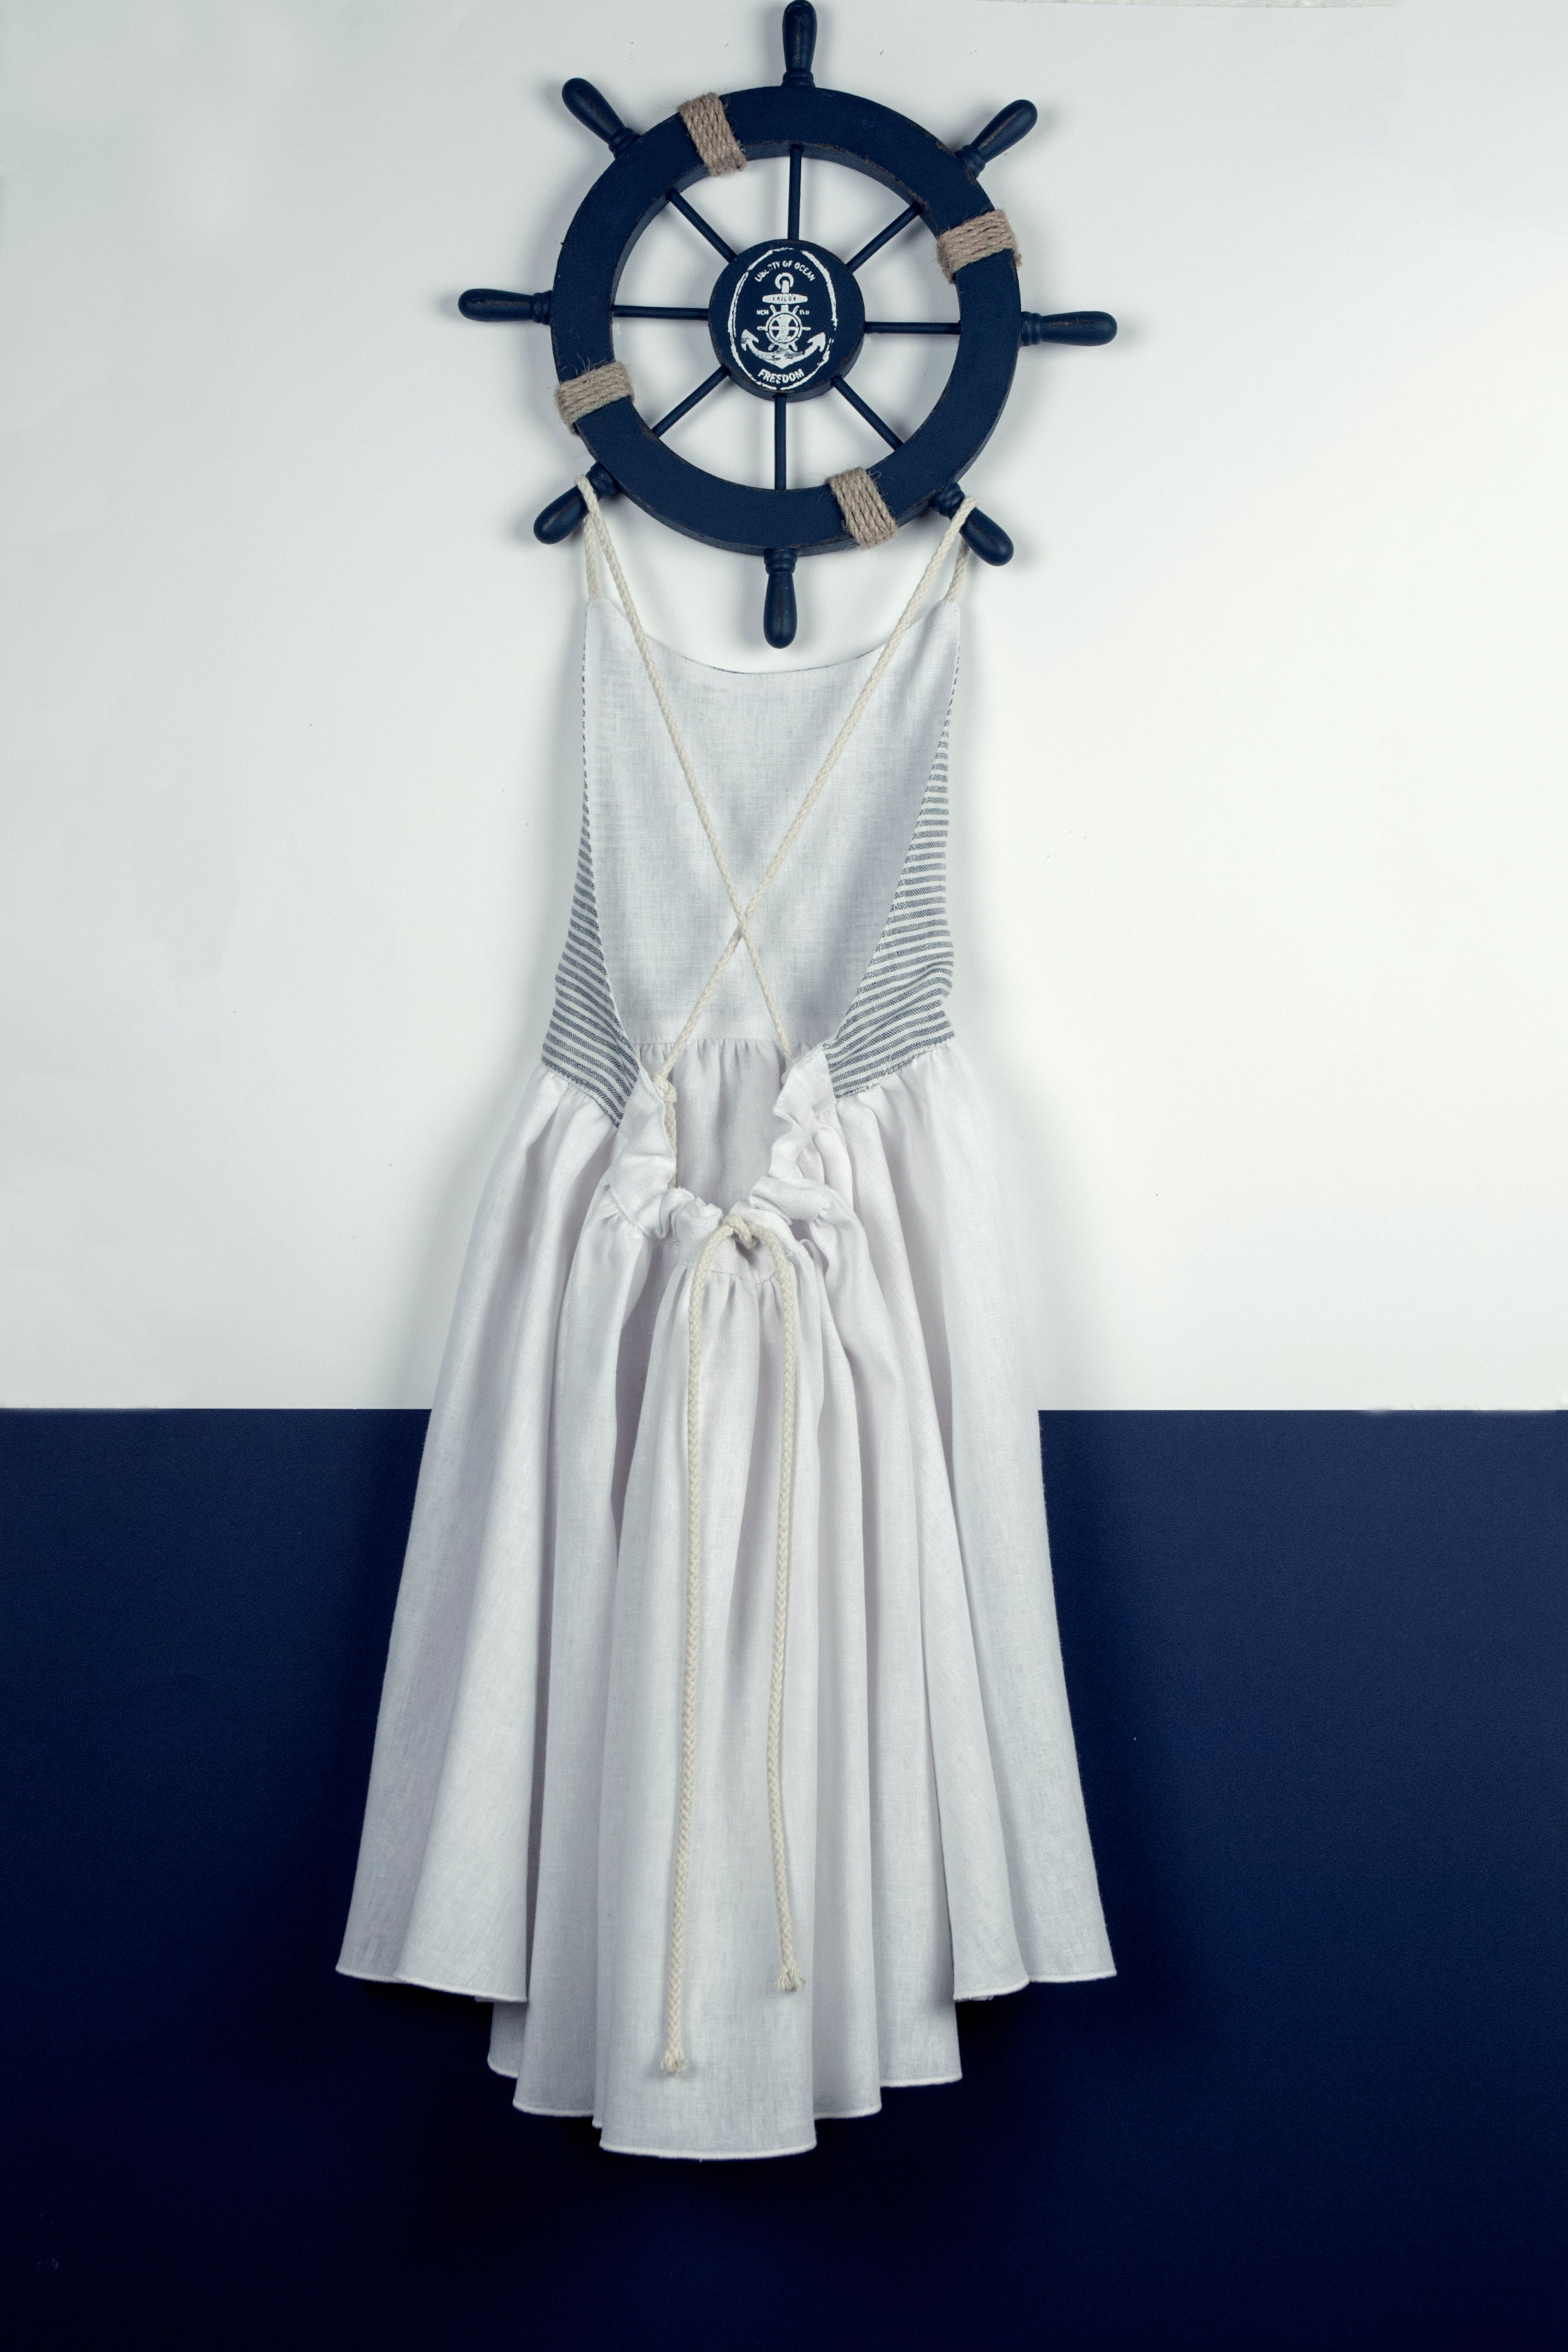 white linen party dress